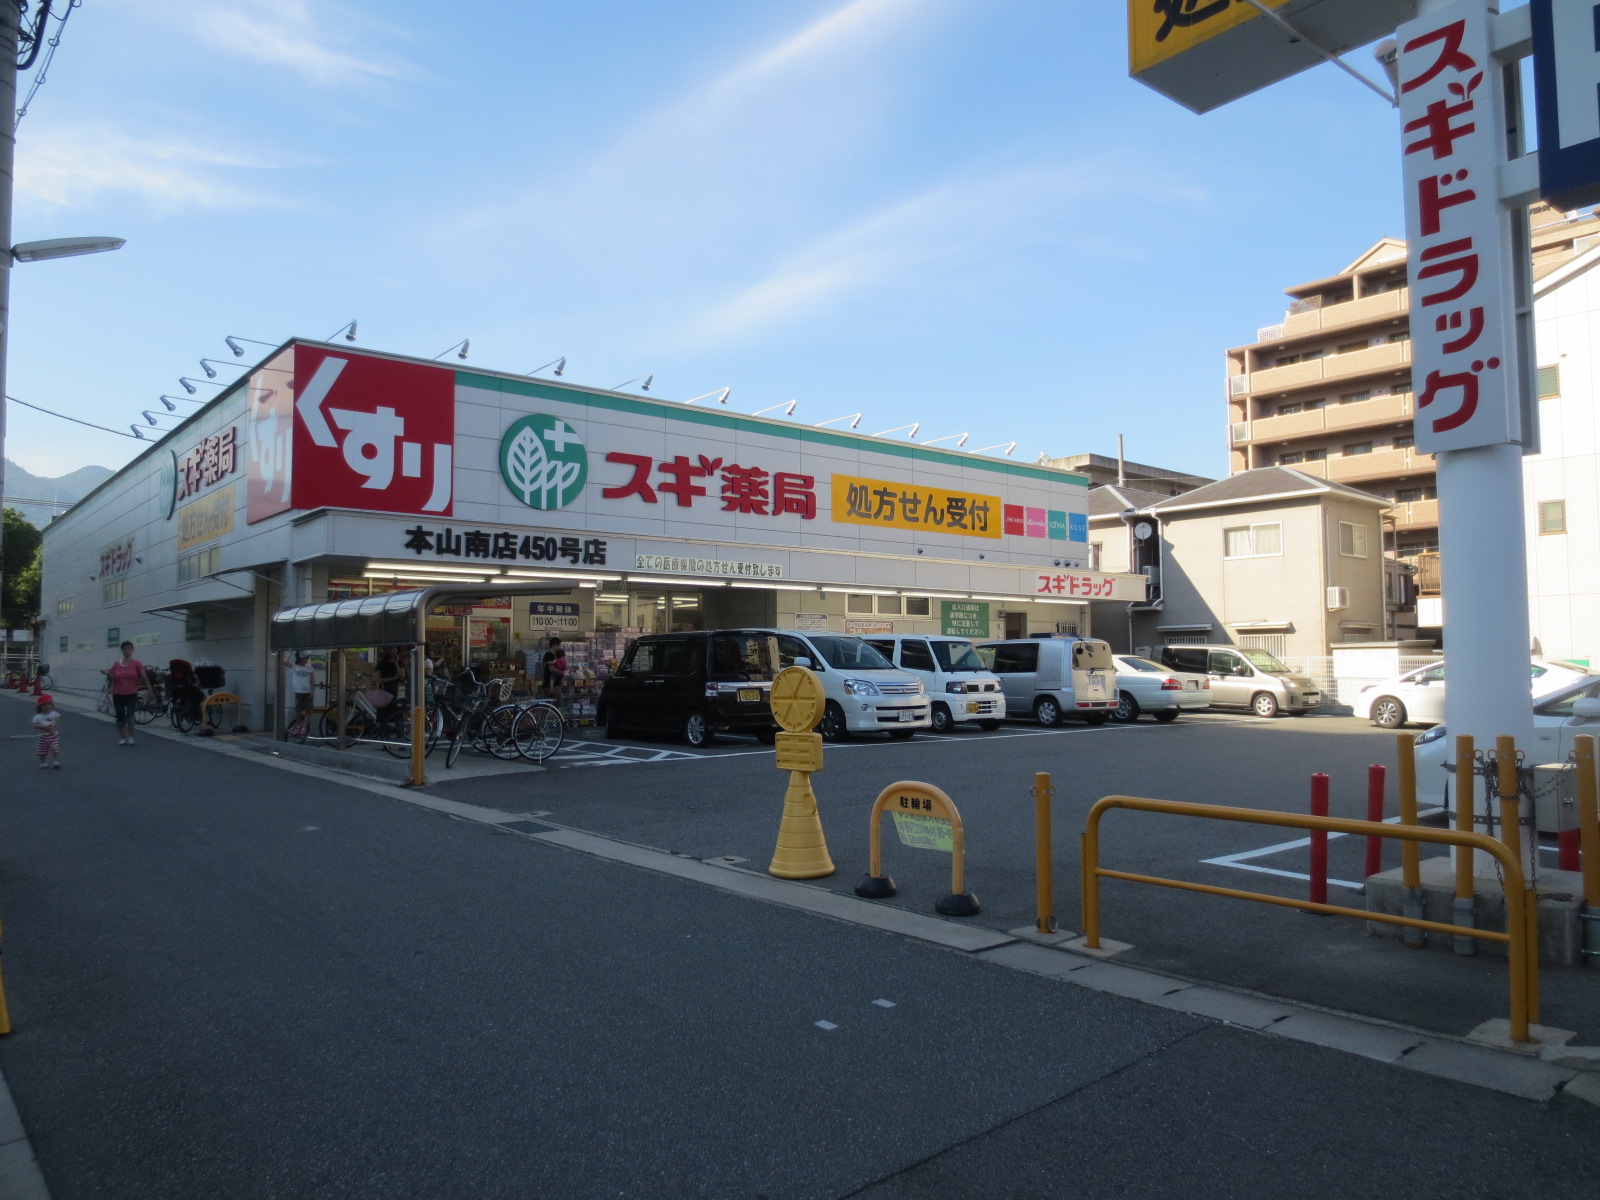 Dorakkusutoa. Cedar pharmacy Motoyamaminami shop 630m until (drugstore)